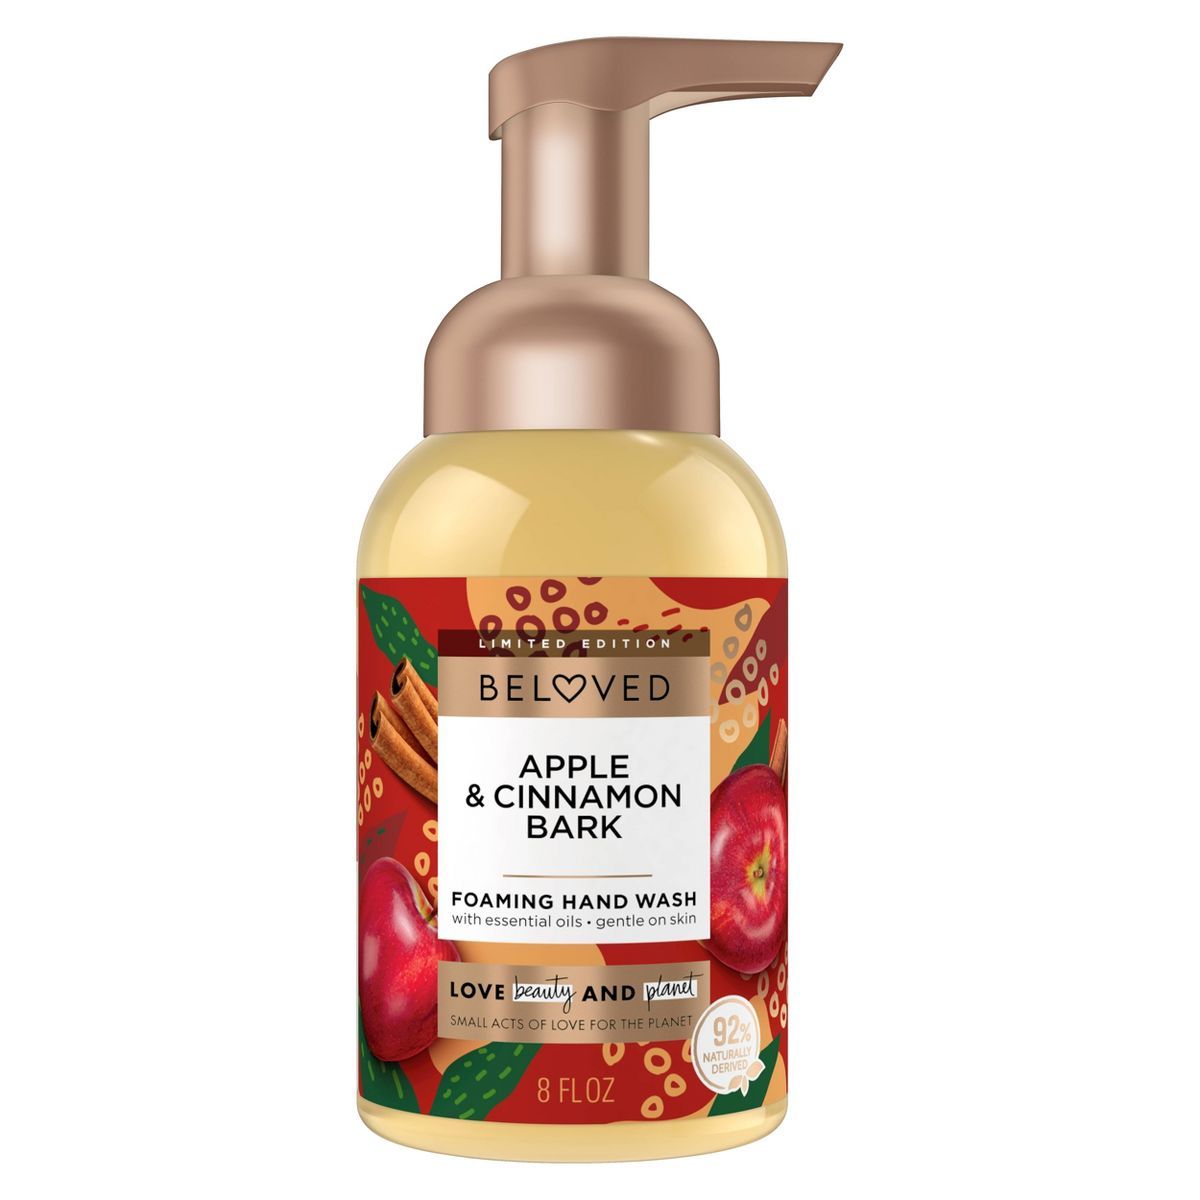 Beloved Apple & Cinnamon Bark Foaming Hand Wash - 8 fl oz | Target